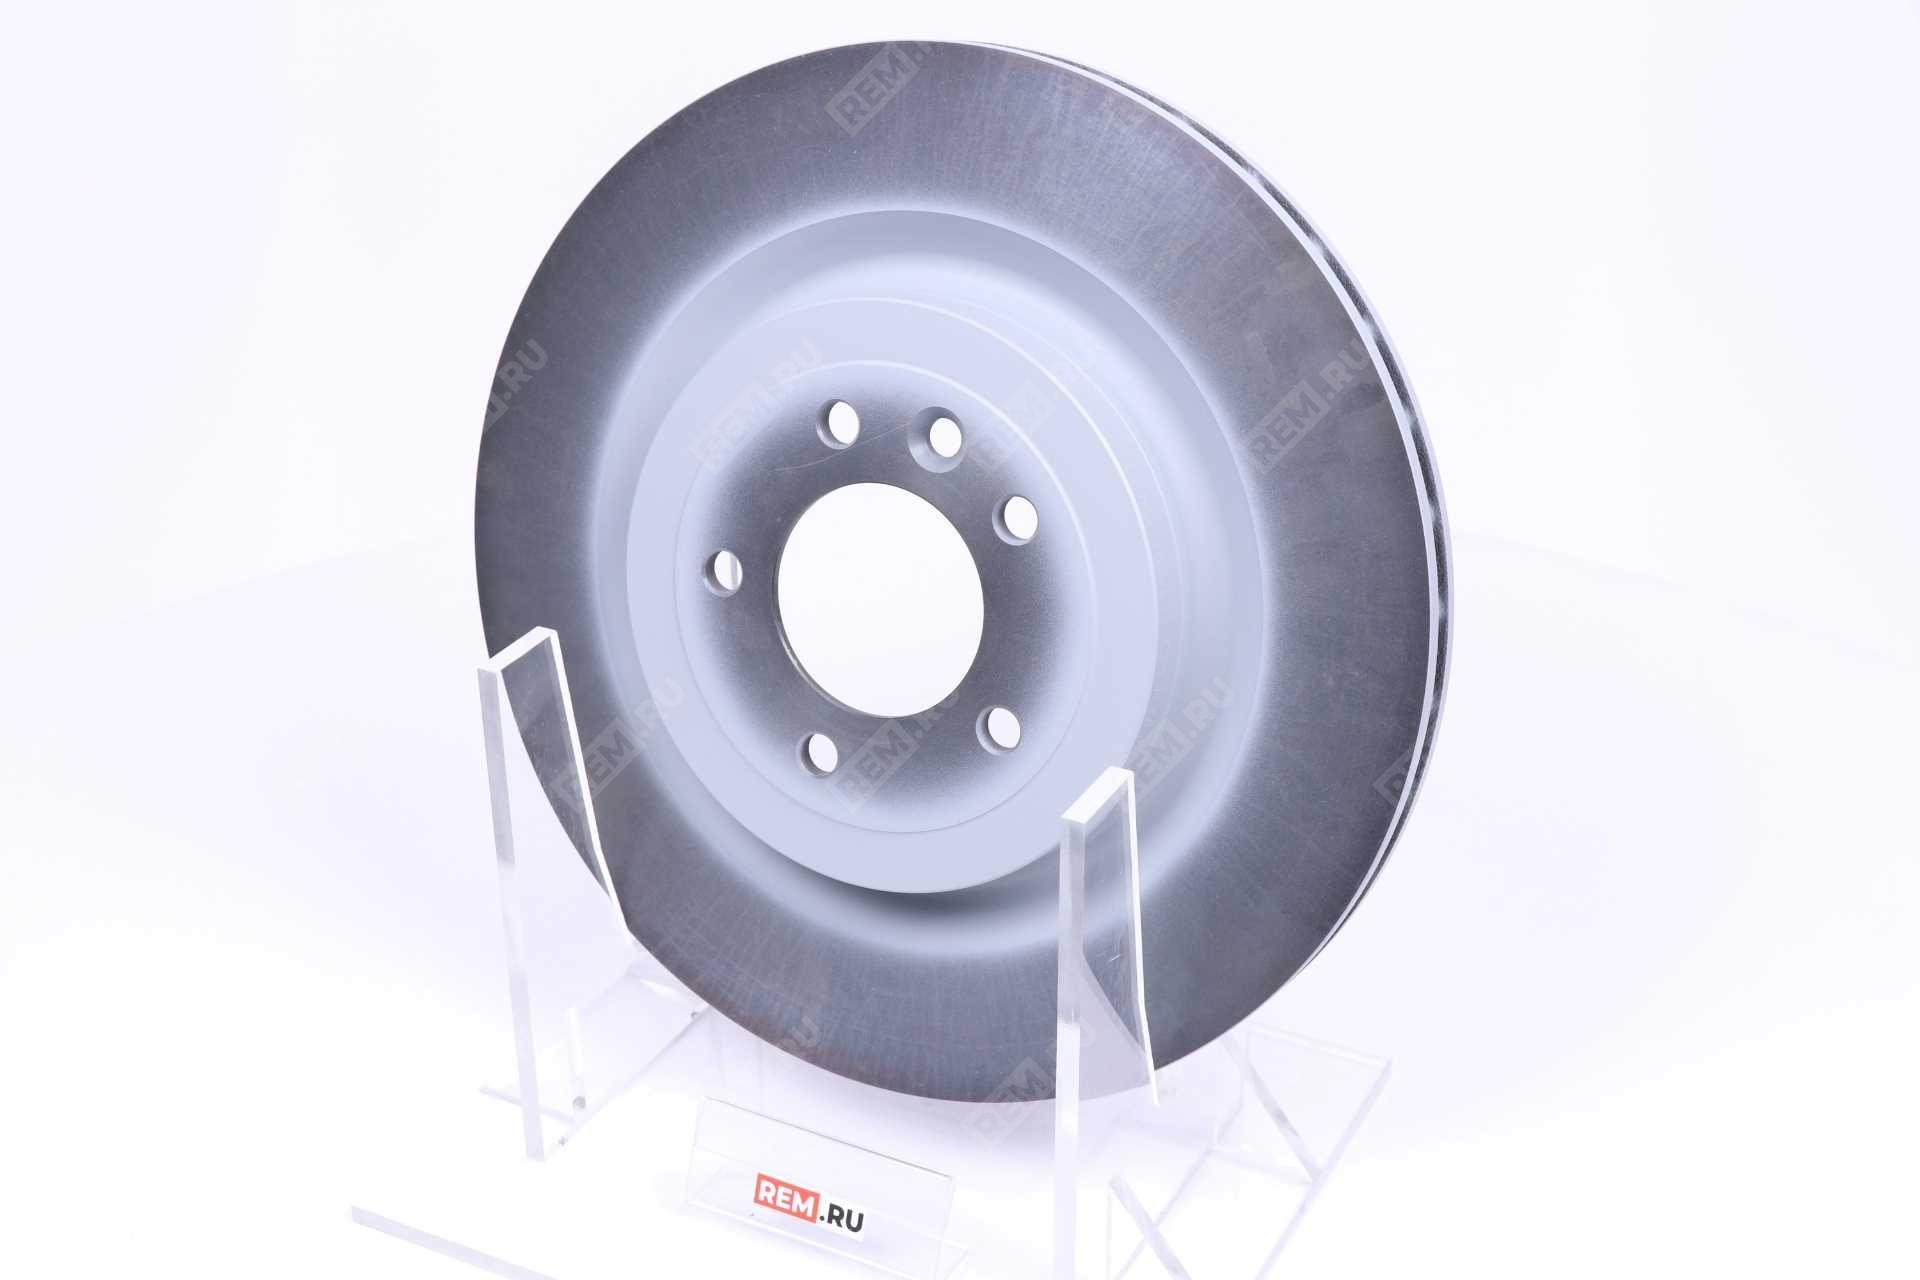  LR033303 диск тормозной задний